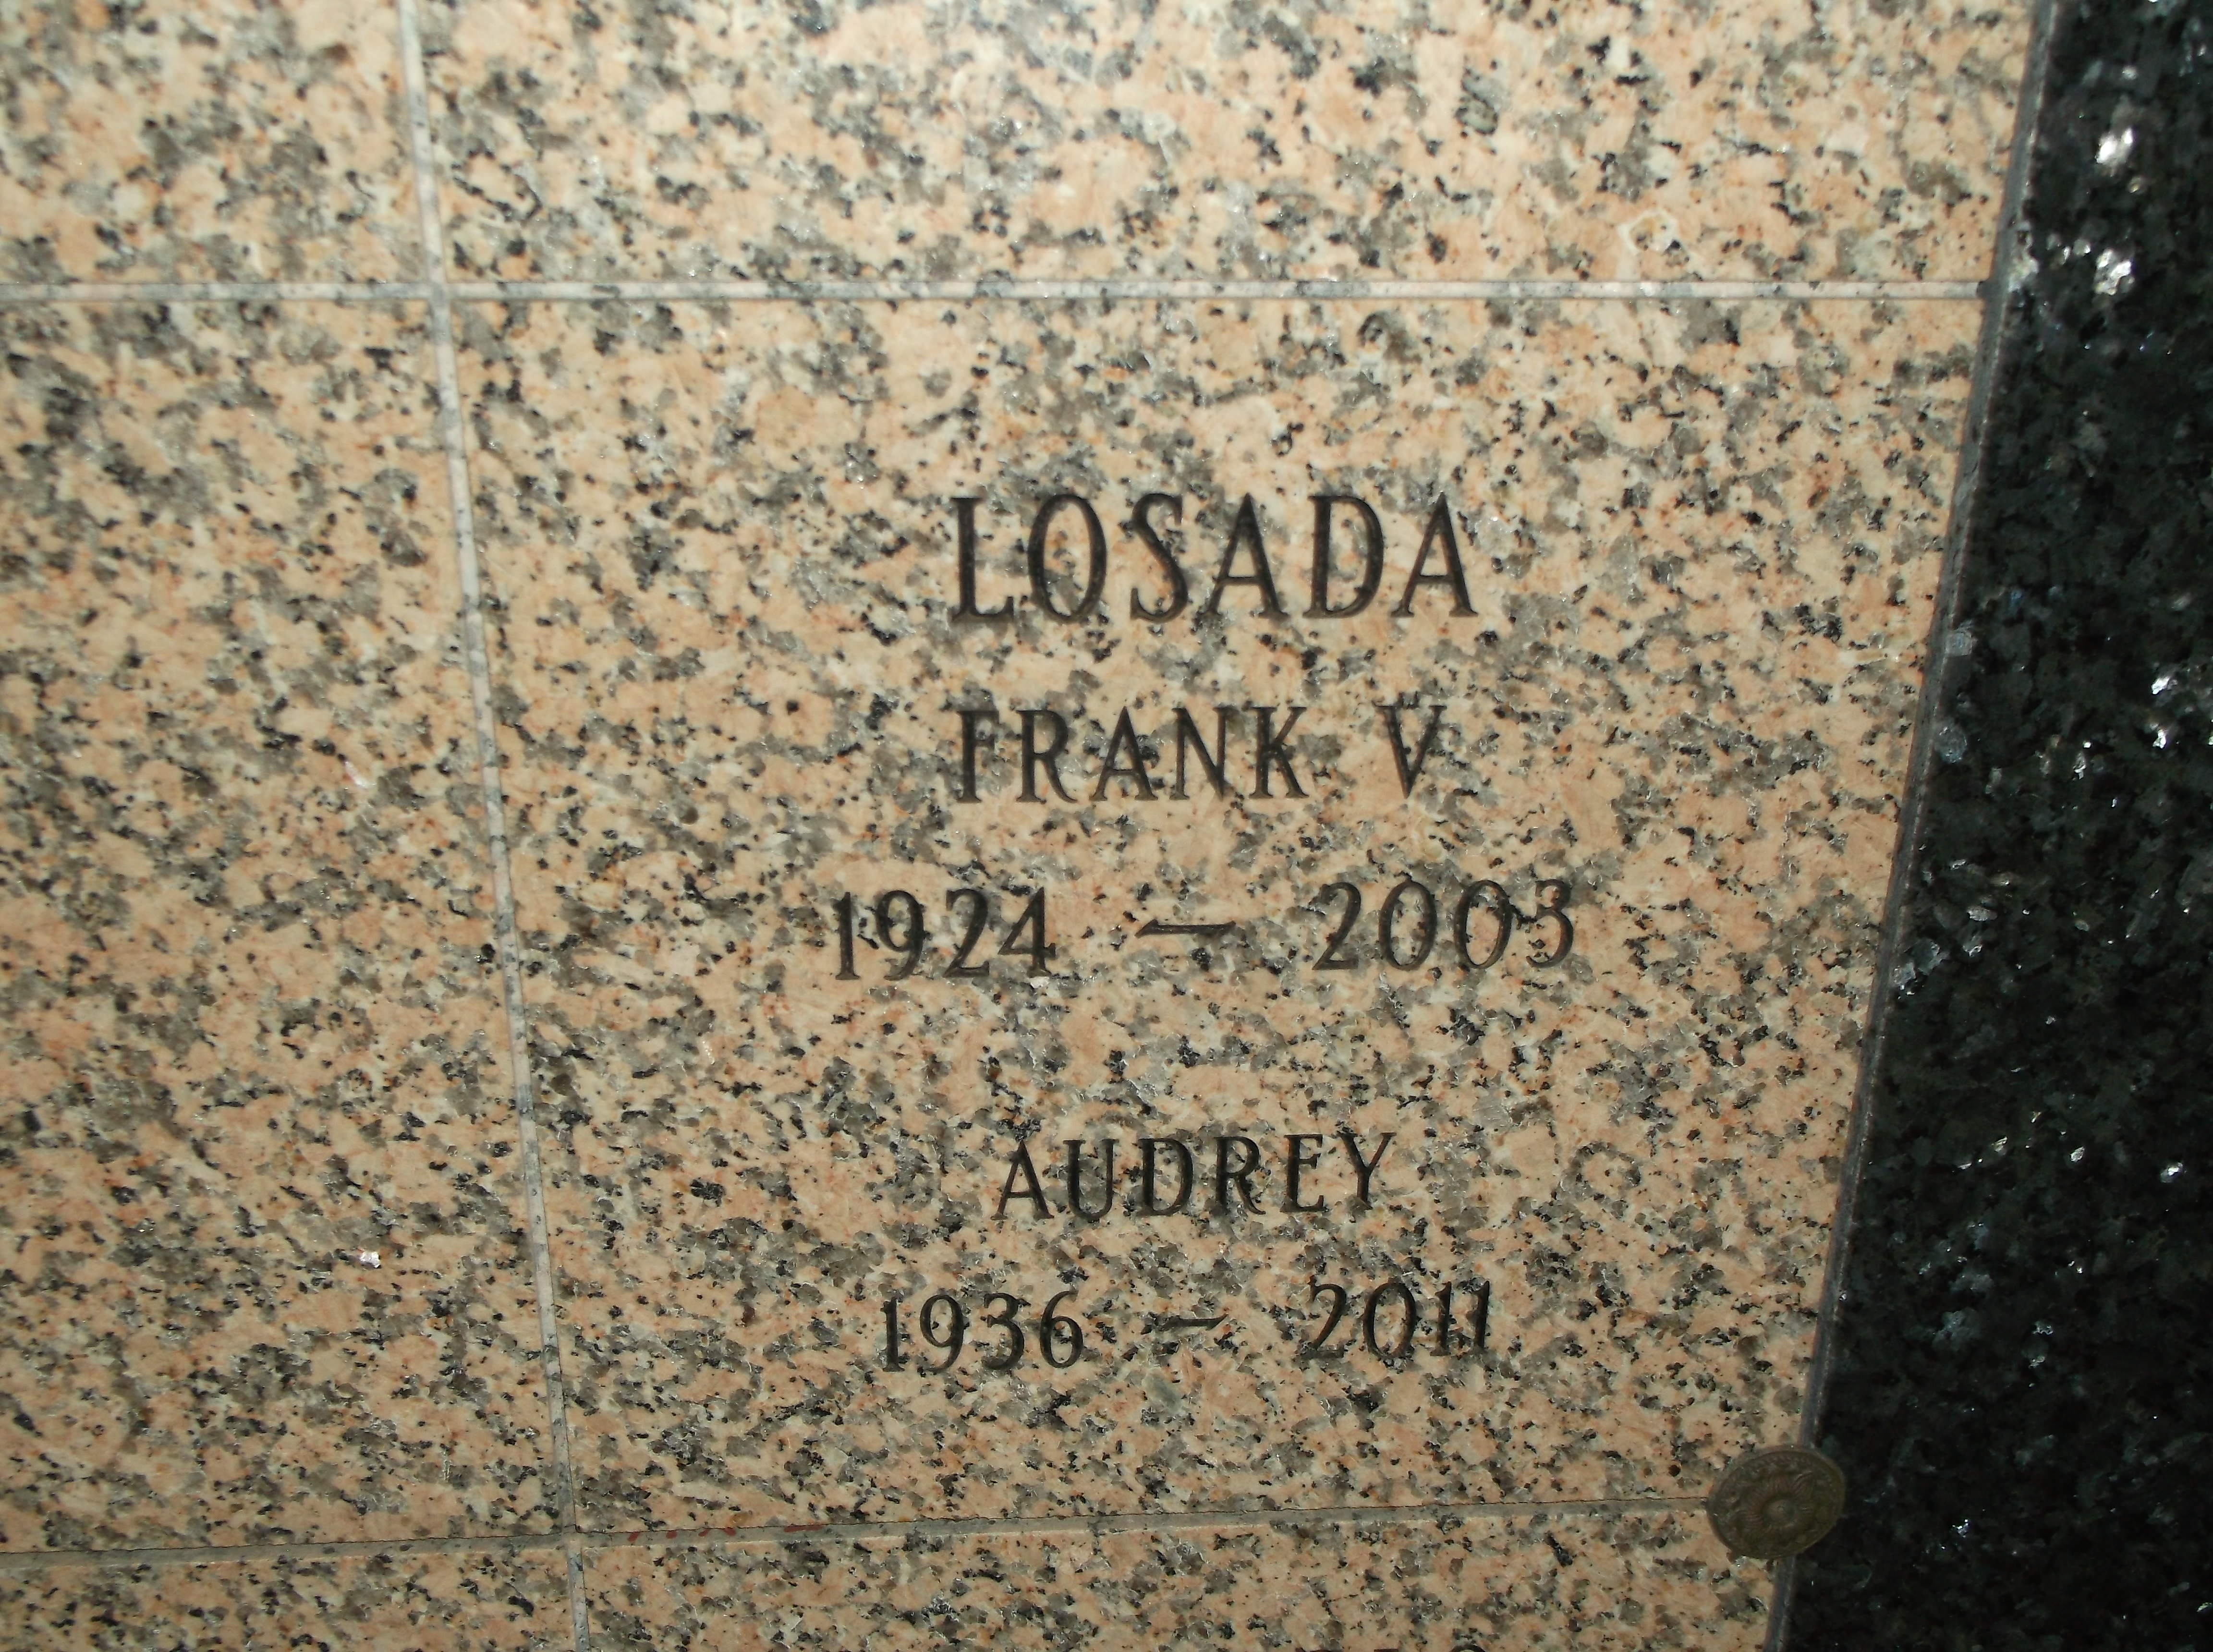 Frank V Losada